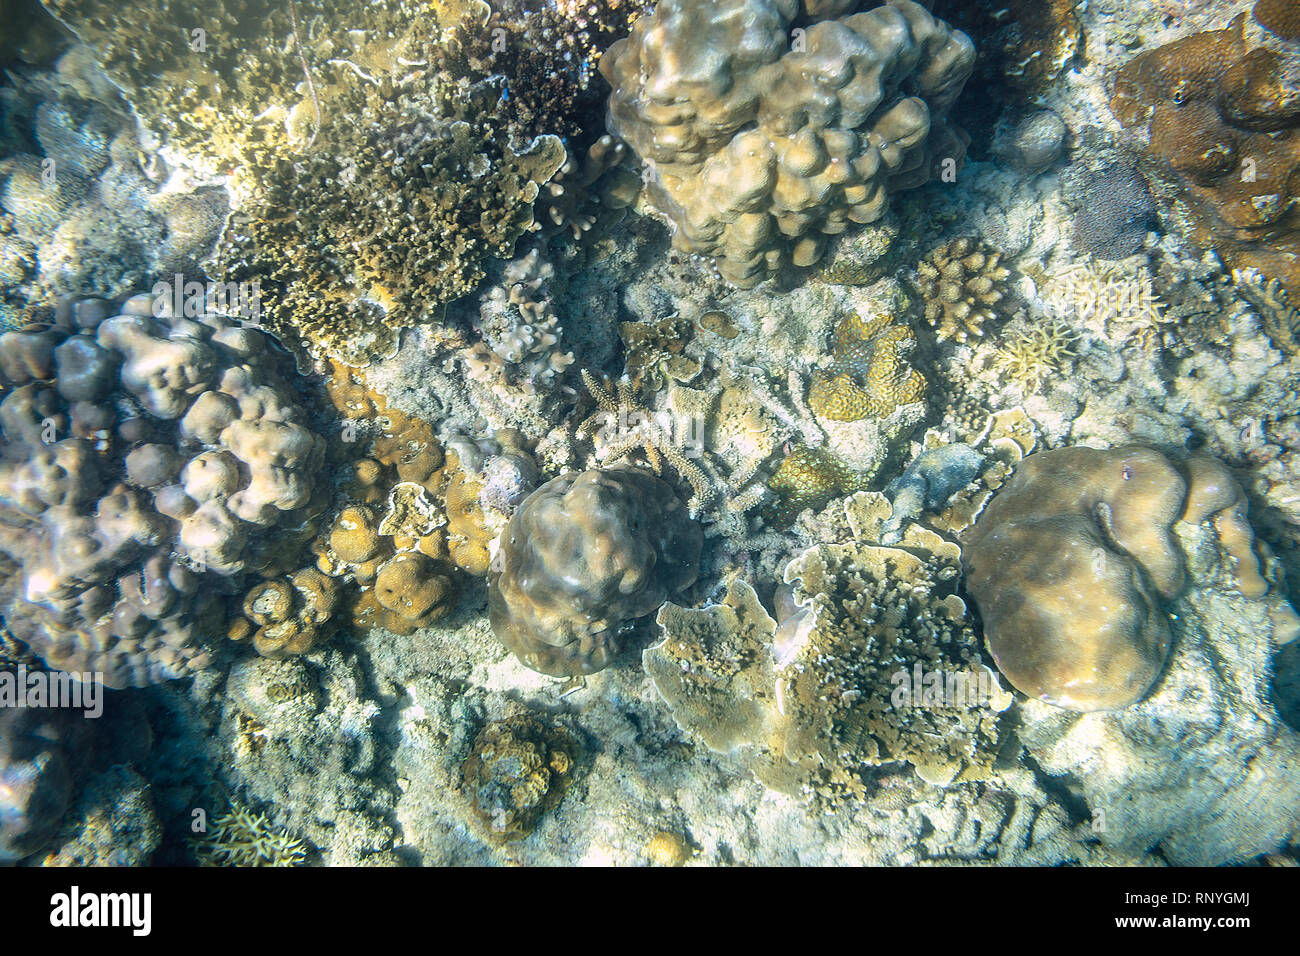 Snorkeling exploring underwater view - beautiful underwater antler carol reef on the seabed, close up Stock Photo